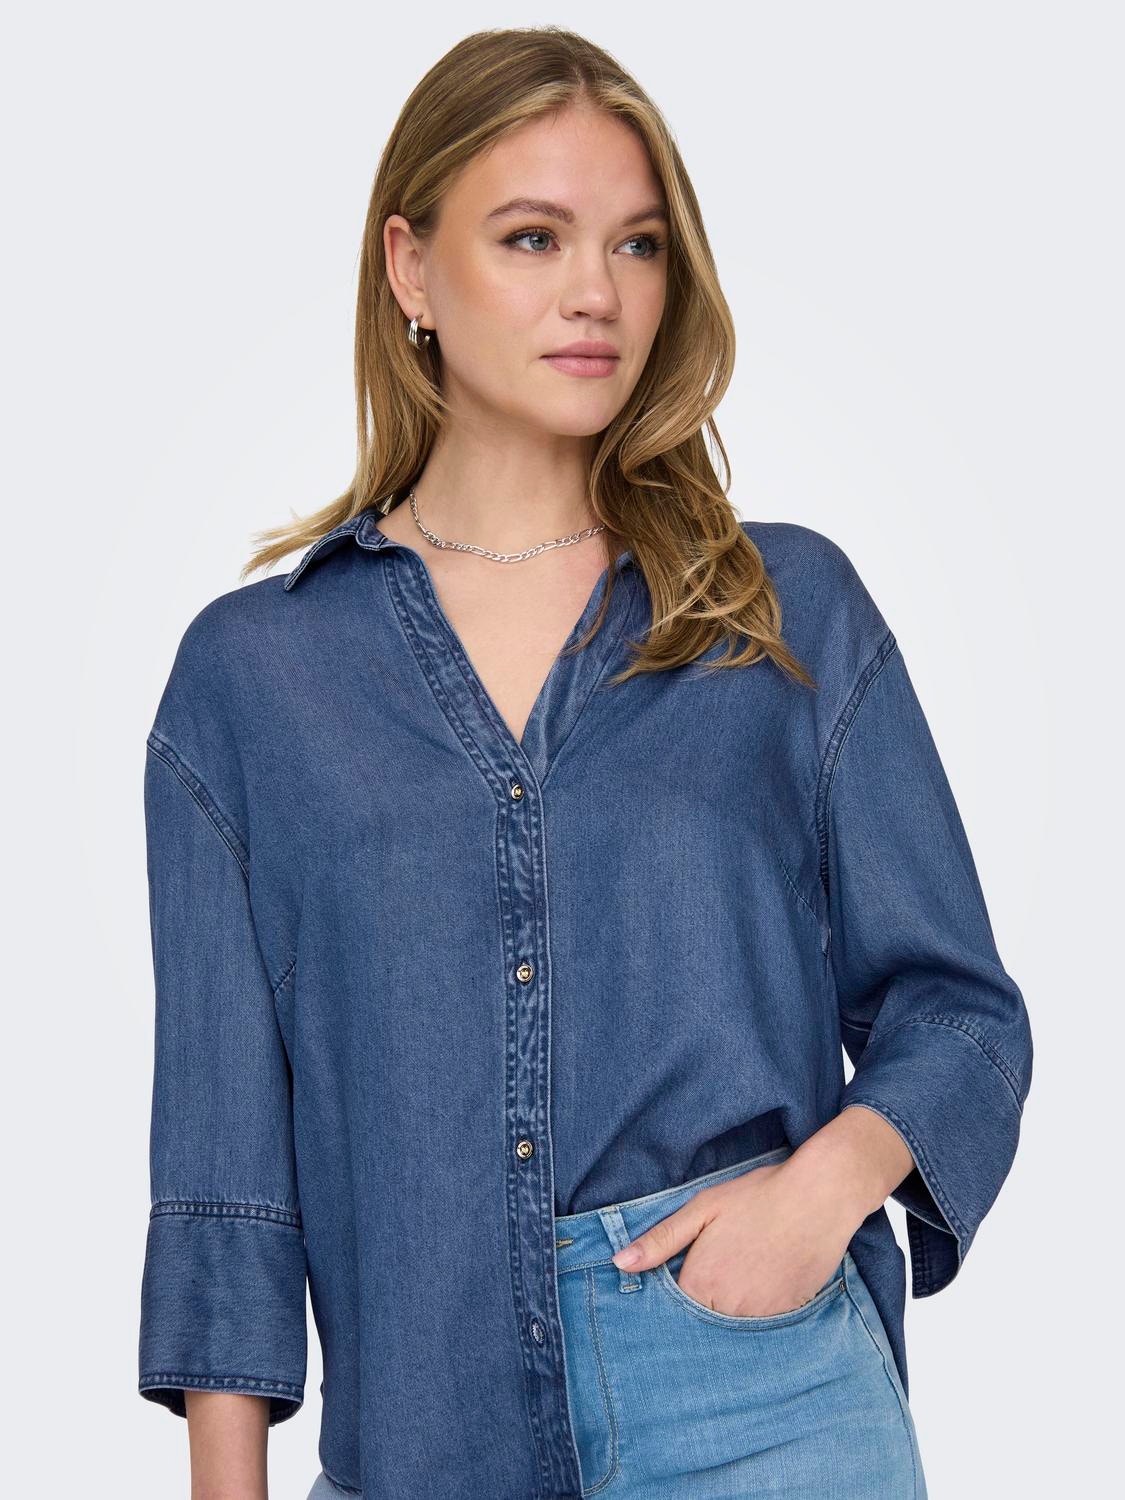 ONLY Loose Fit China Collar Shirt -Medium Blue Denim - 15305416